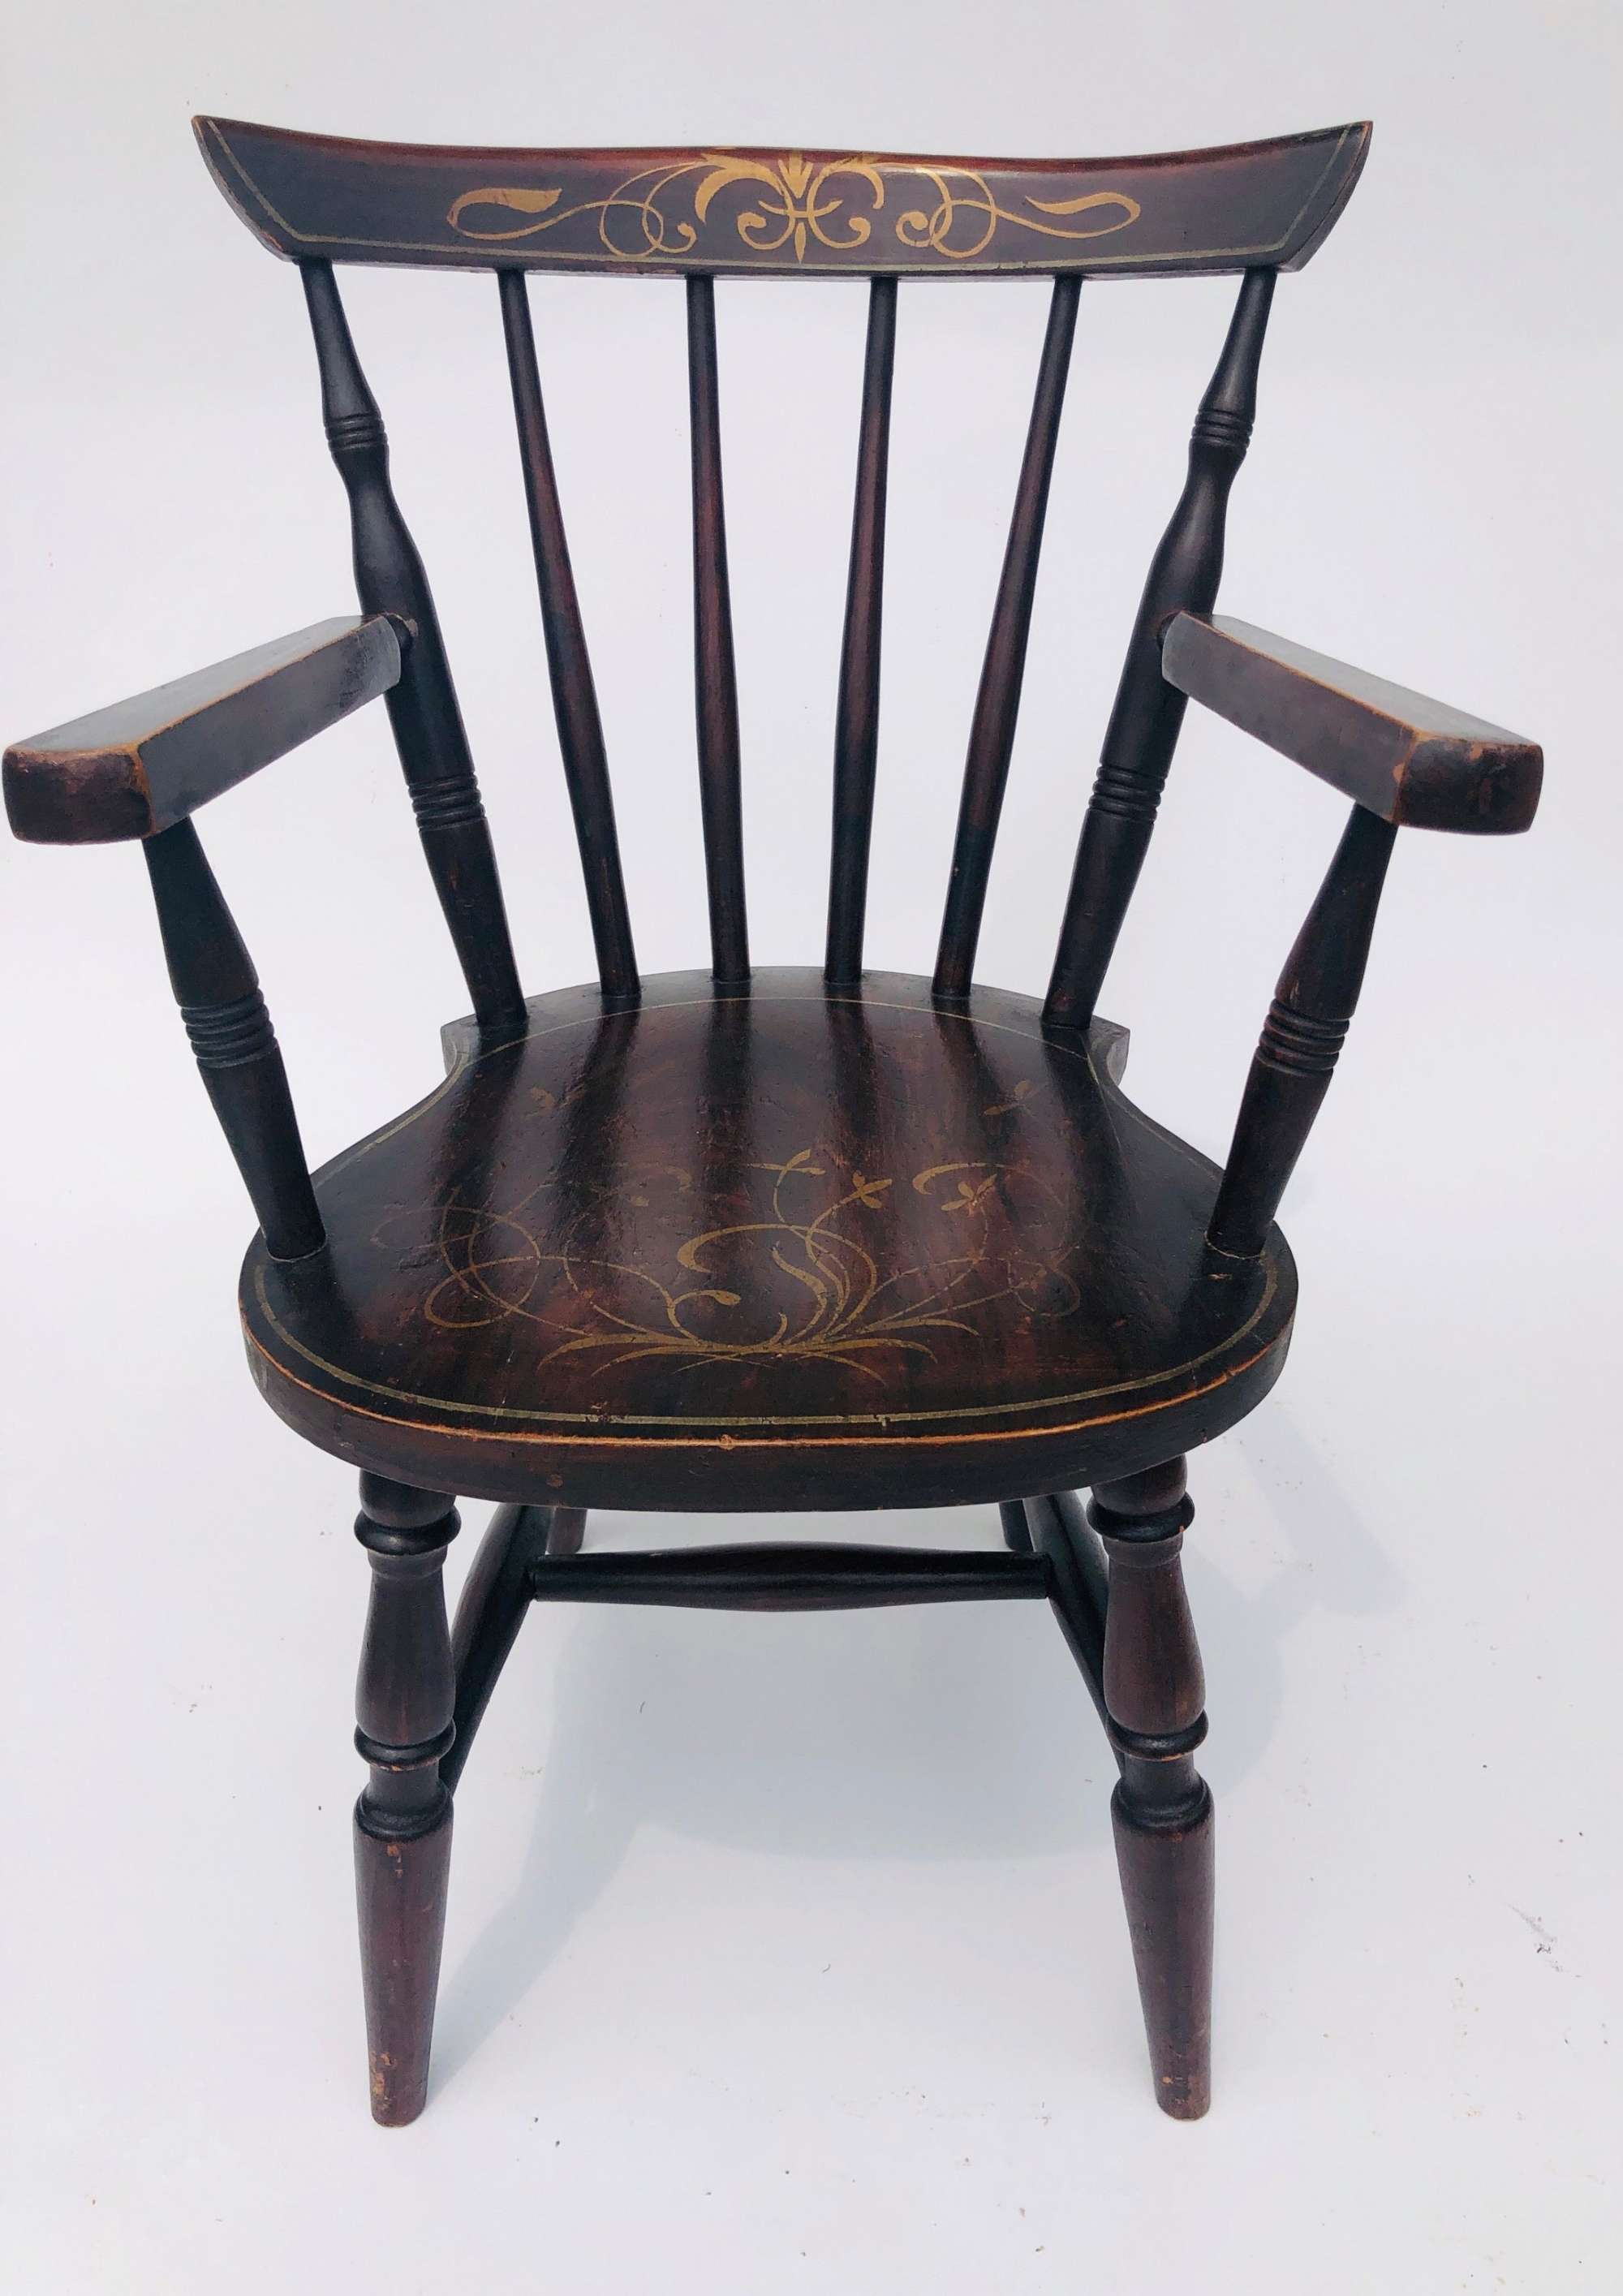 Victorian Child’s Antique Chair C. 1890 - 1900